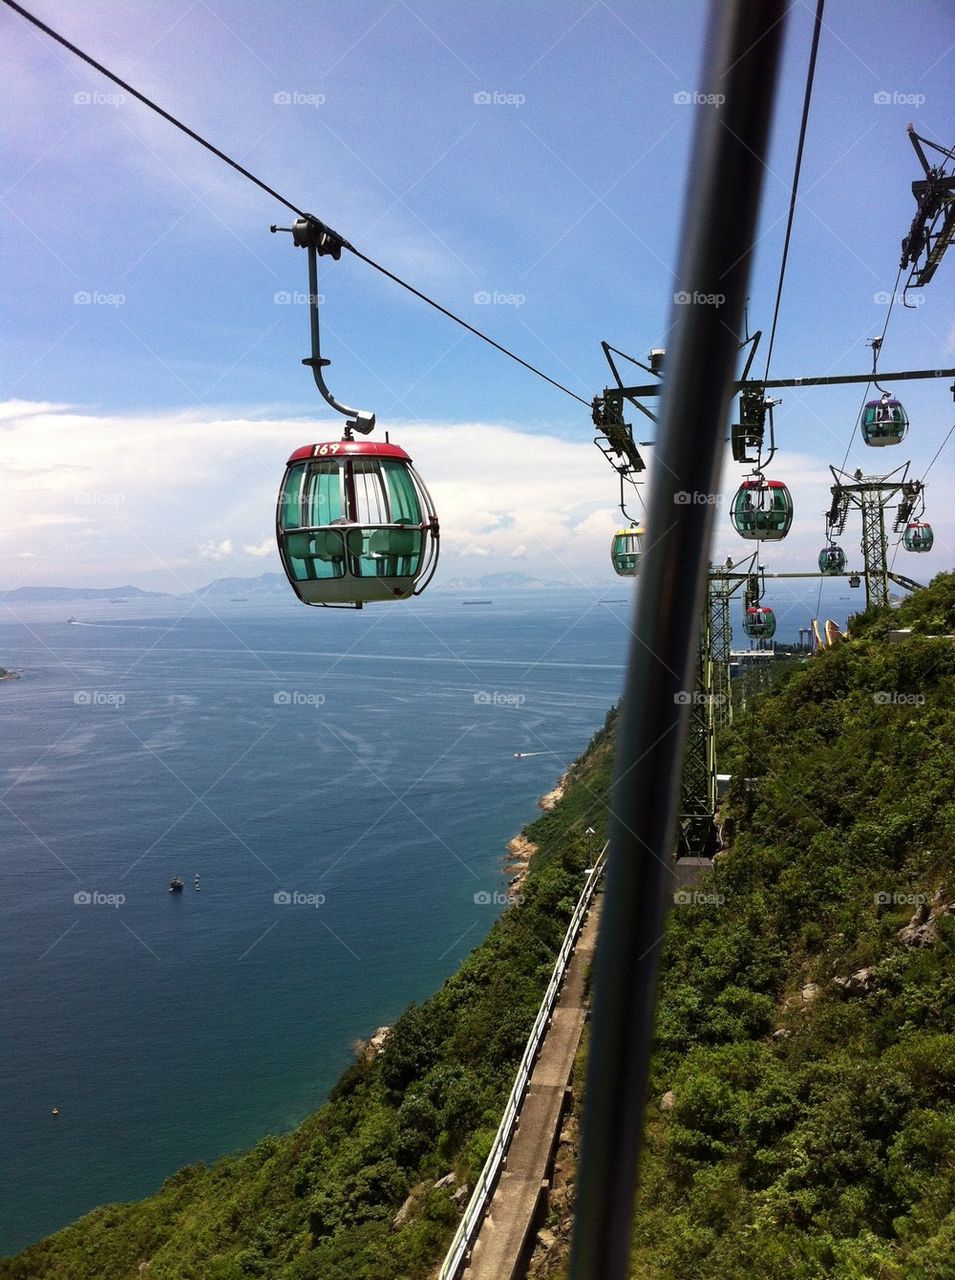 Sky cable car in Hongkong